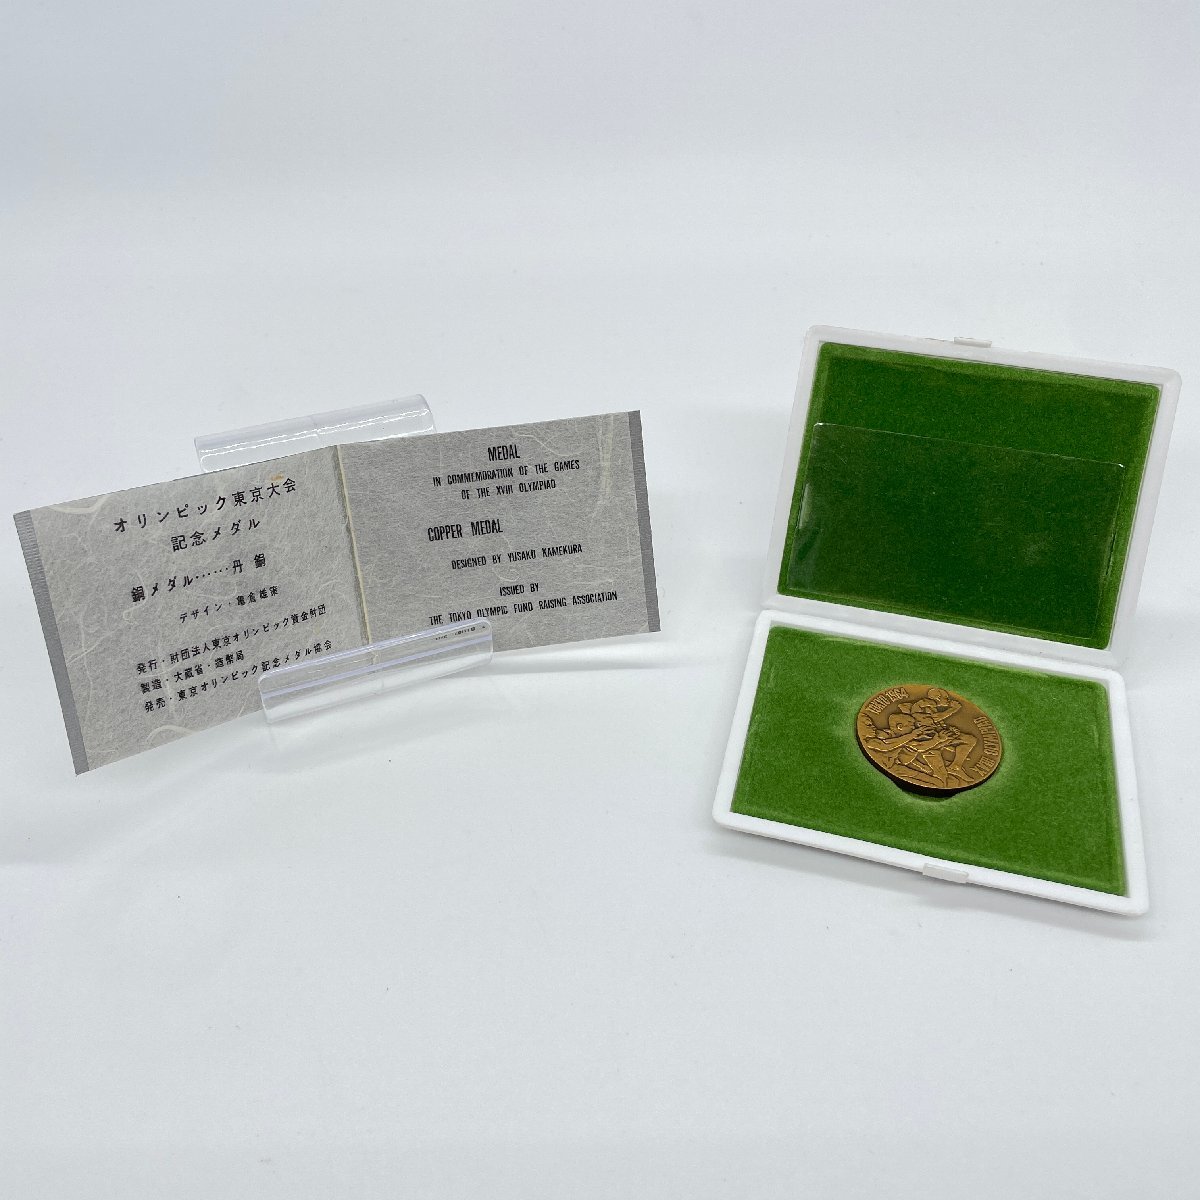 【80】1964 TOKYO OLYMPIC 東京 オリンピック 公式 記念 メダル 大蔵省 造幣局製造 記念 コイン ケース 銅 当時モノ 昭和 レトロ 中古 現状の画像1